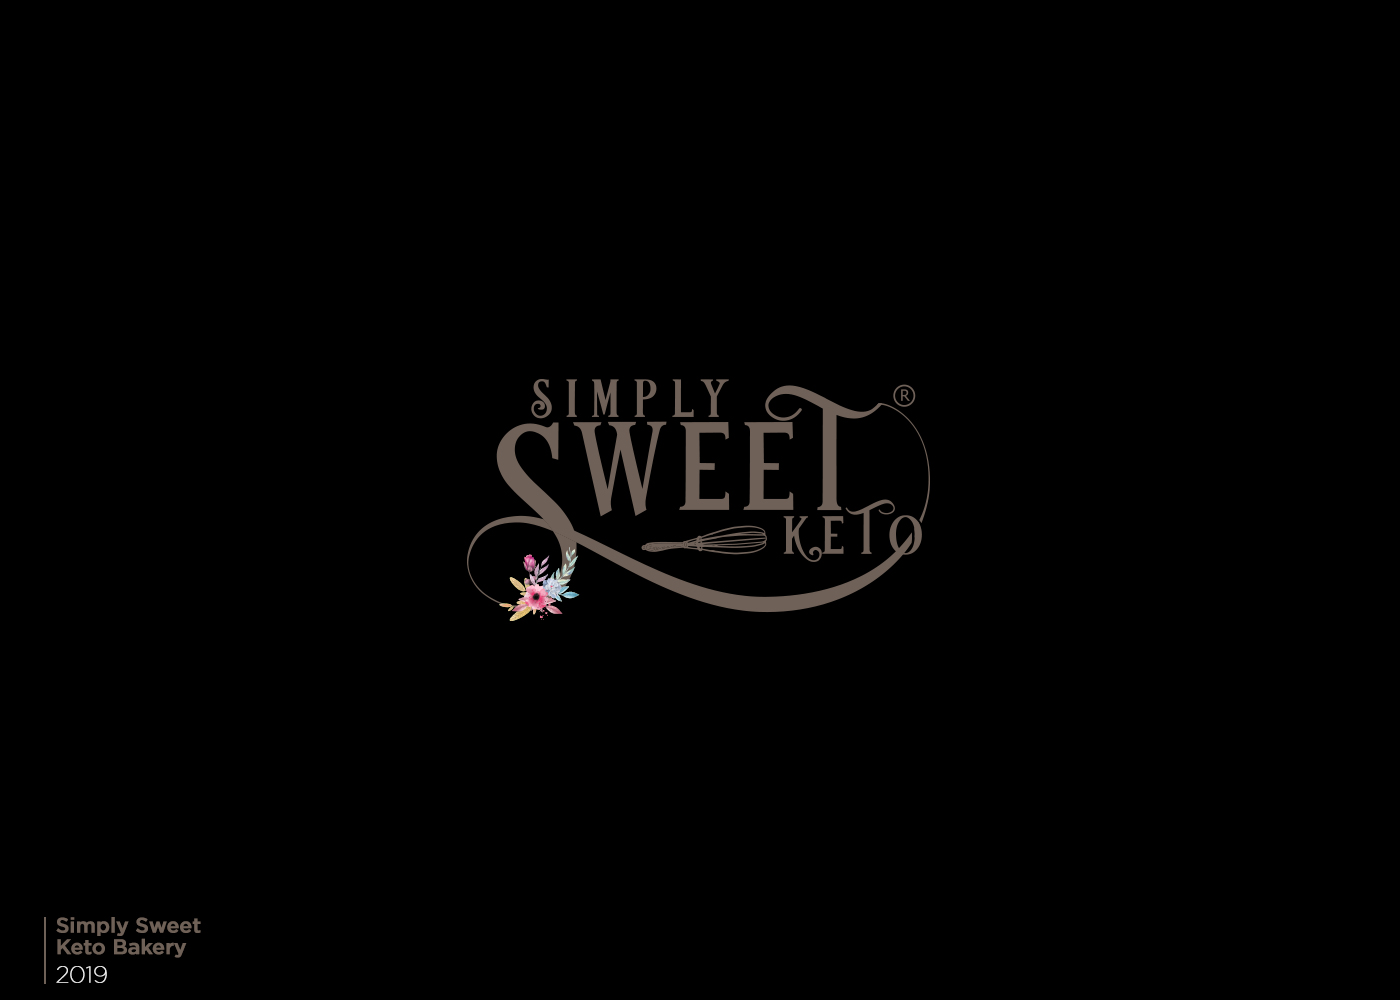 Simply Sweet keto logo and branding